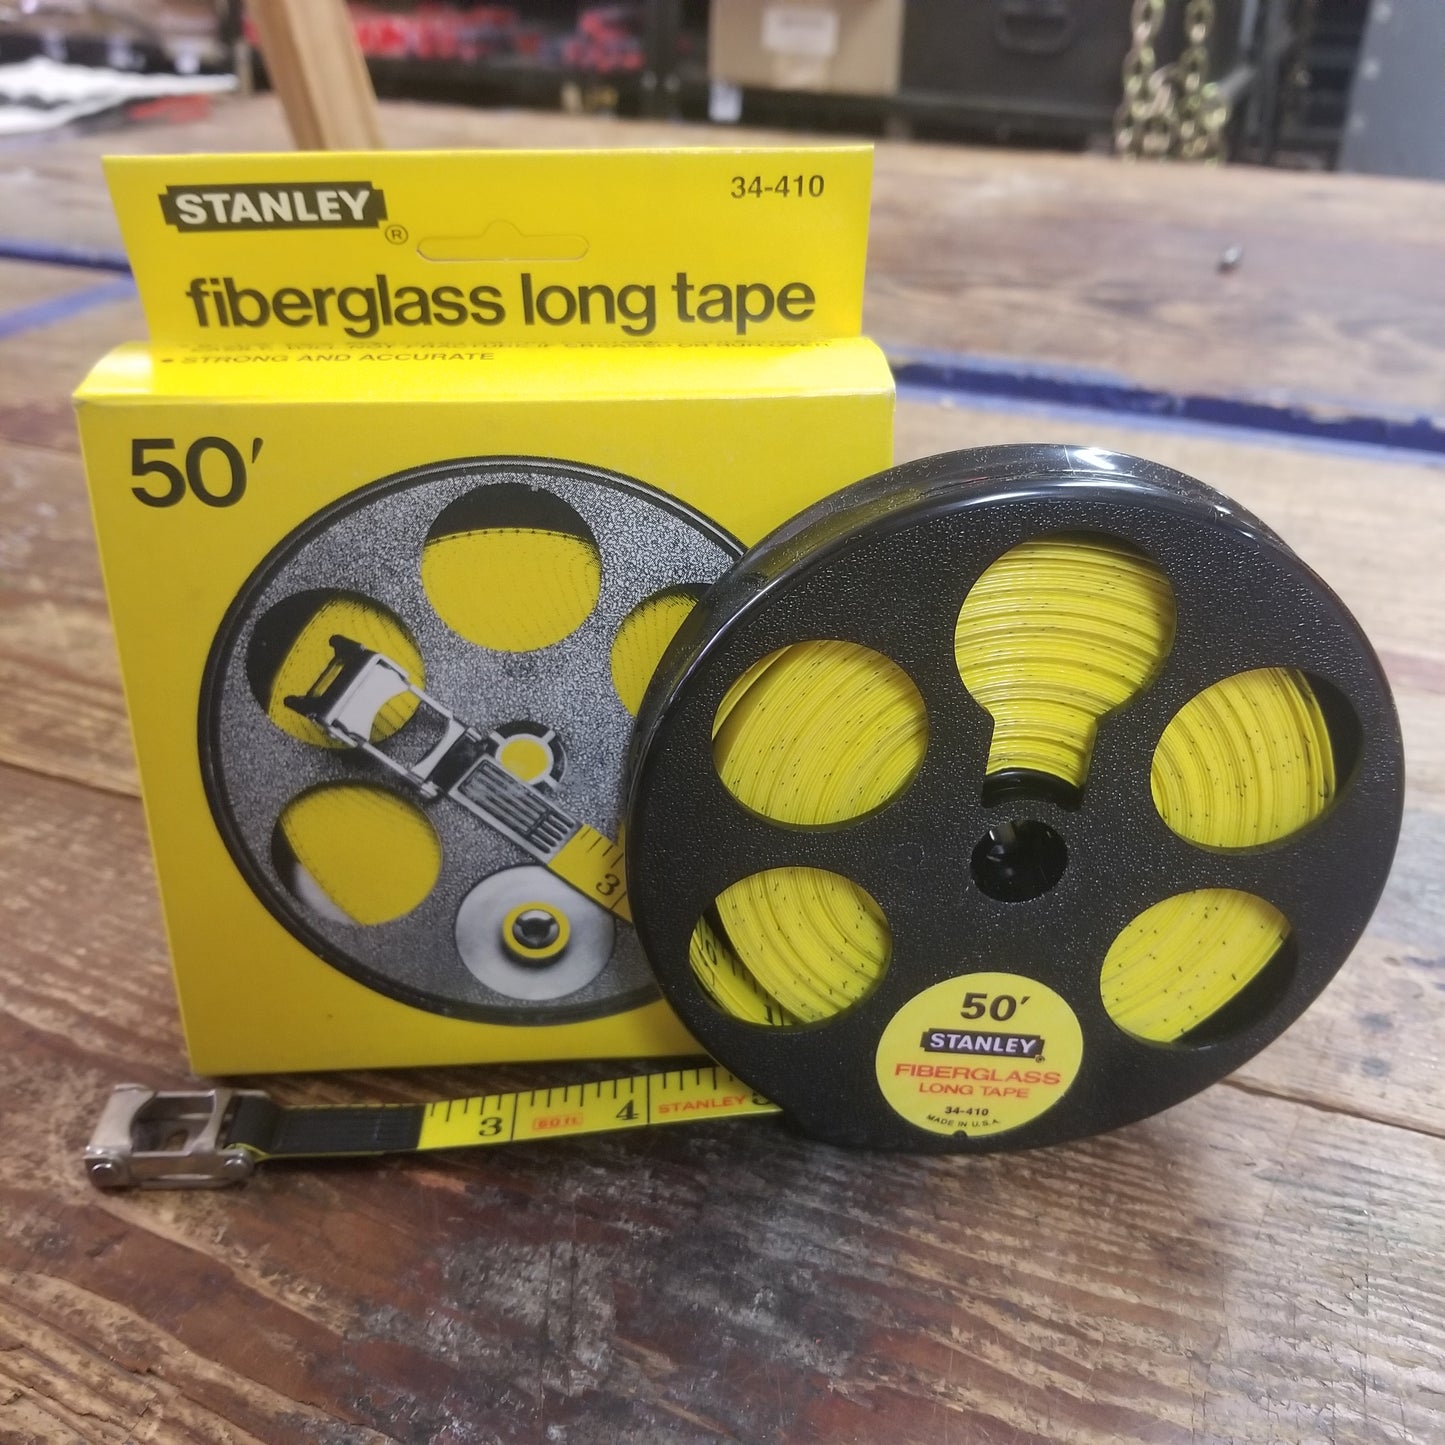 Stanley 50' Fiberglass Long Tape Round Reel (34-410)